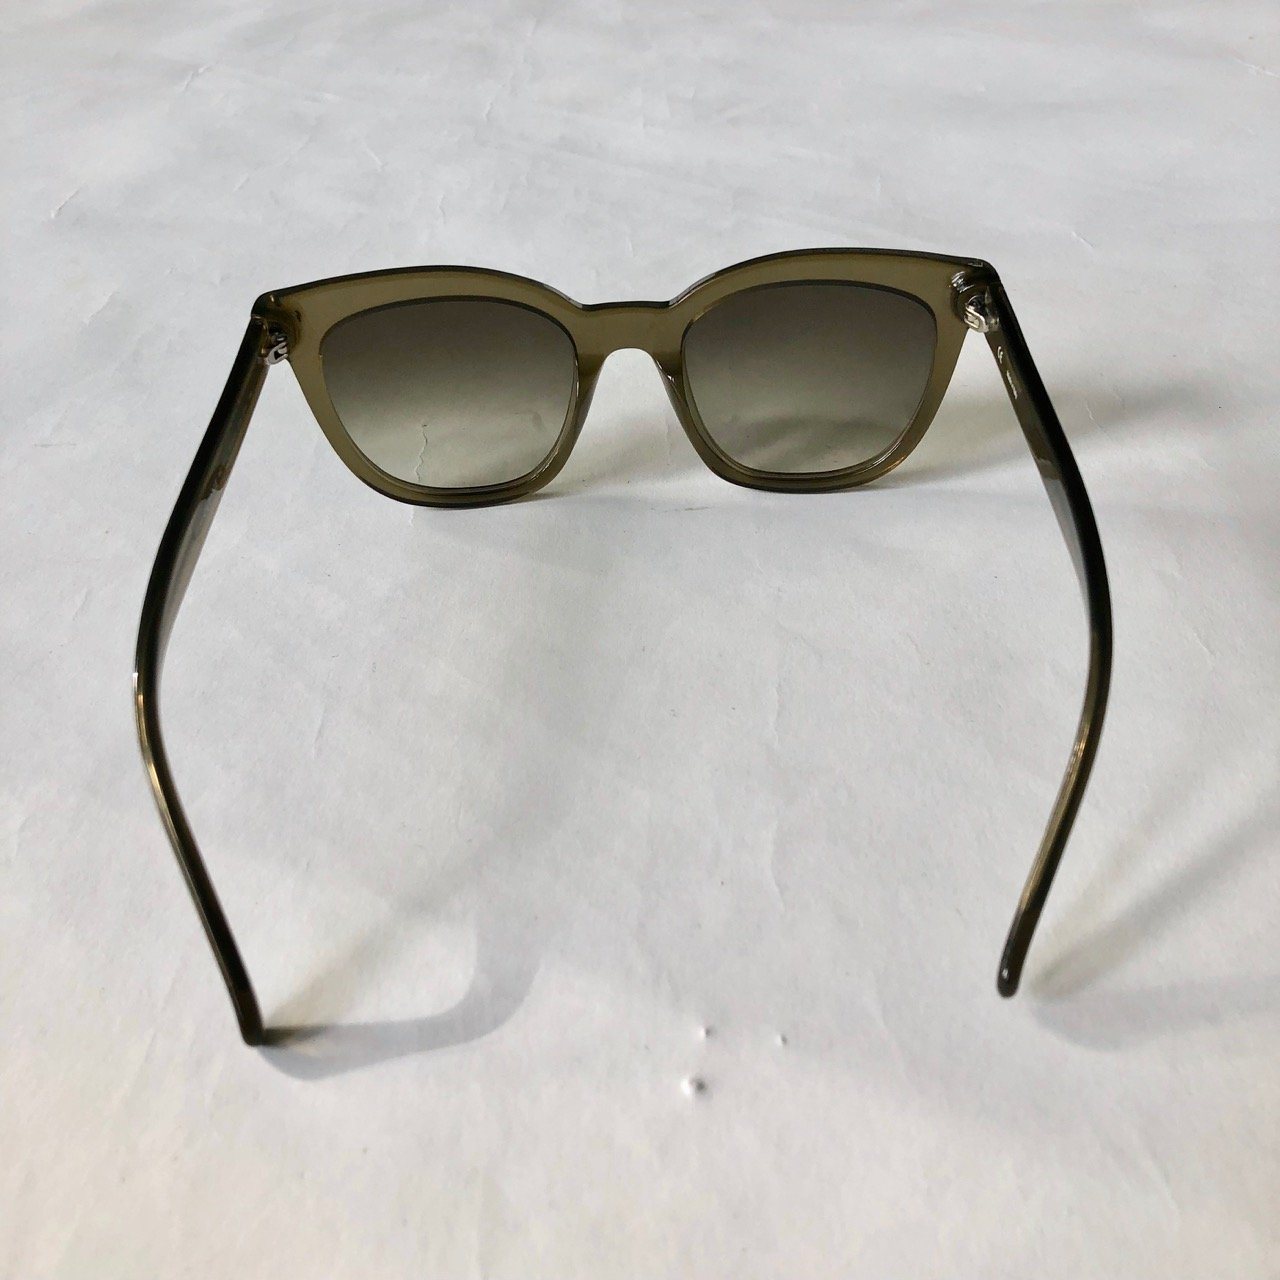 Celine olive green frame sunglasses